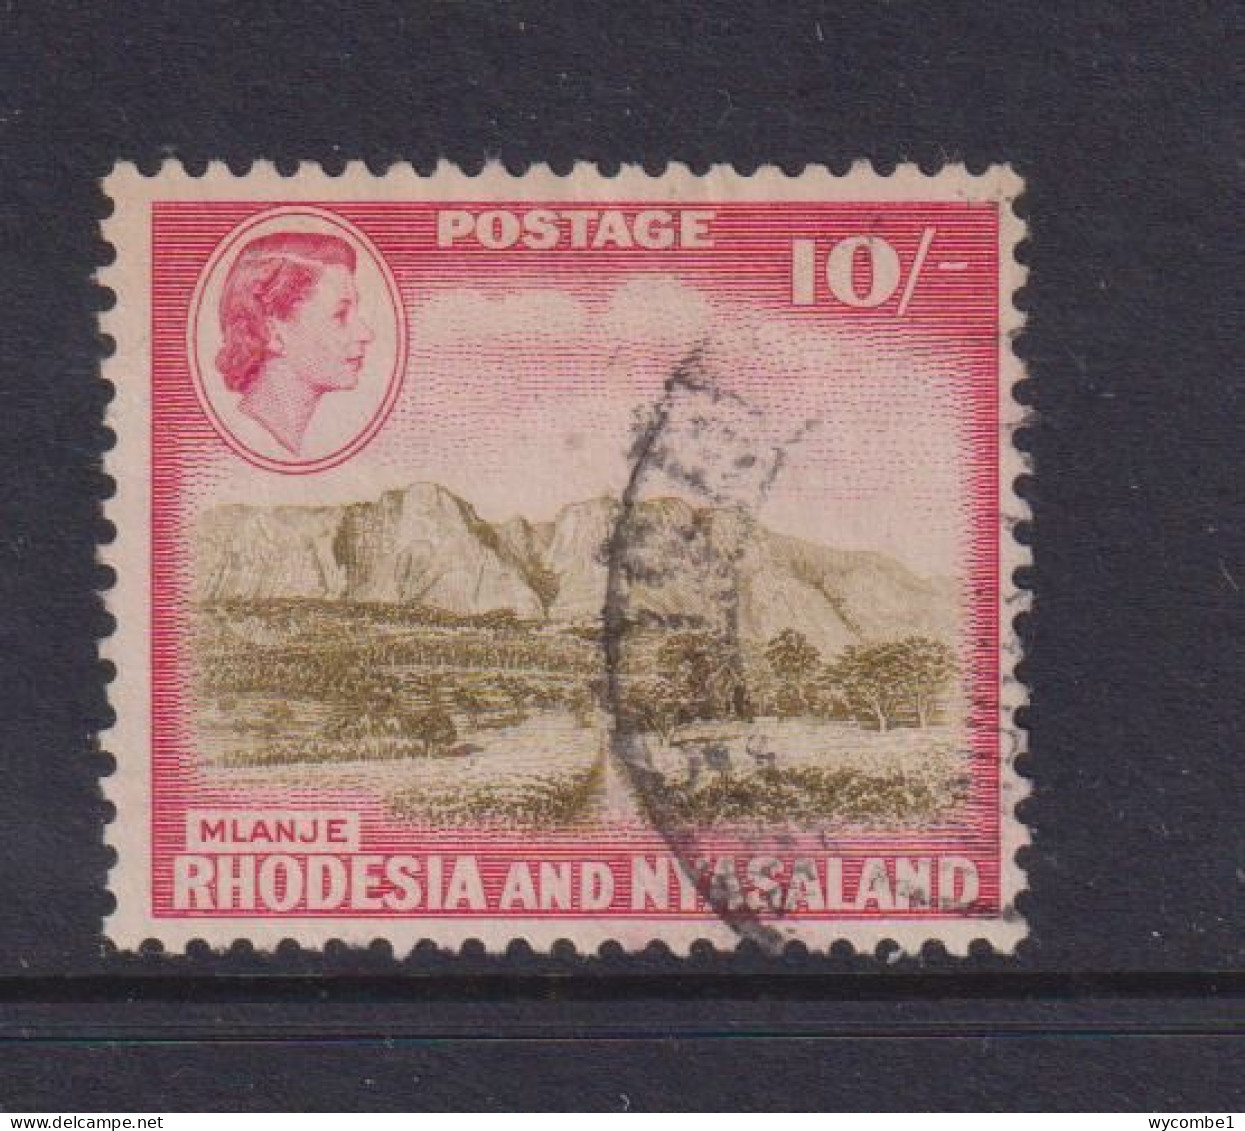 RHODESIA  AND NYASALAND - 1959 Definitive 10s  Used As Scan - Rhodésie & Nyasaland (1954-1963)